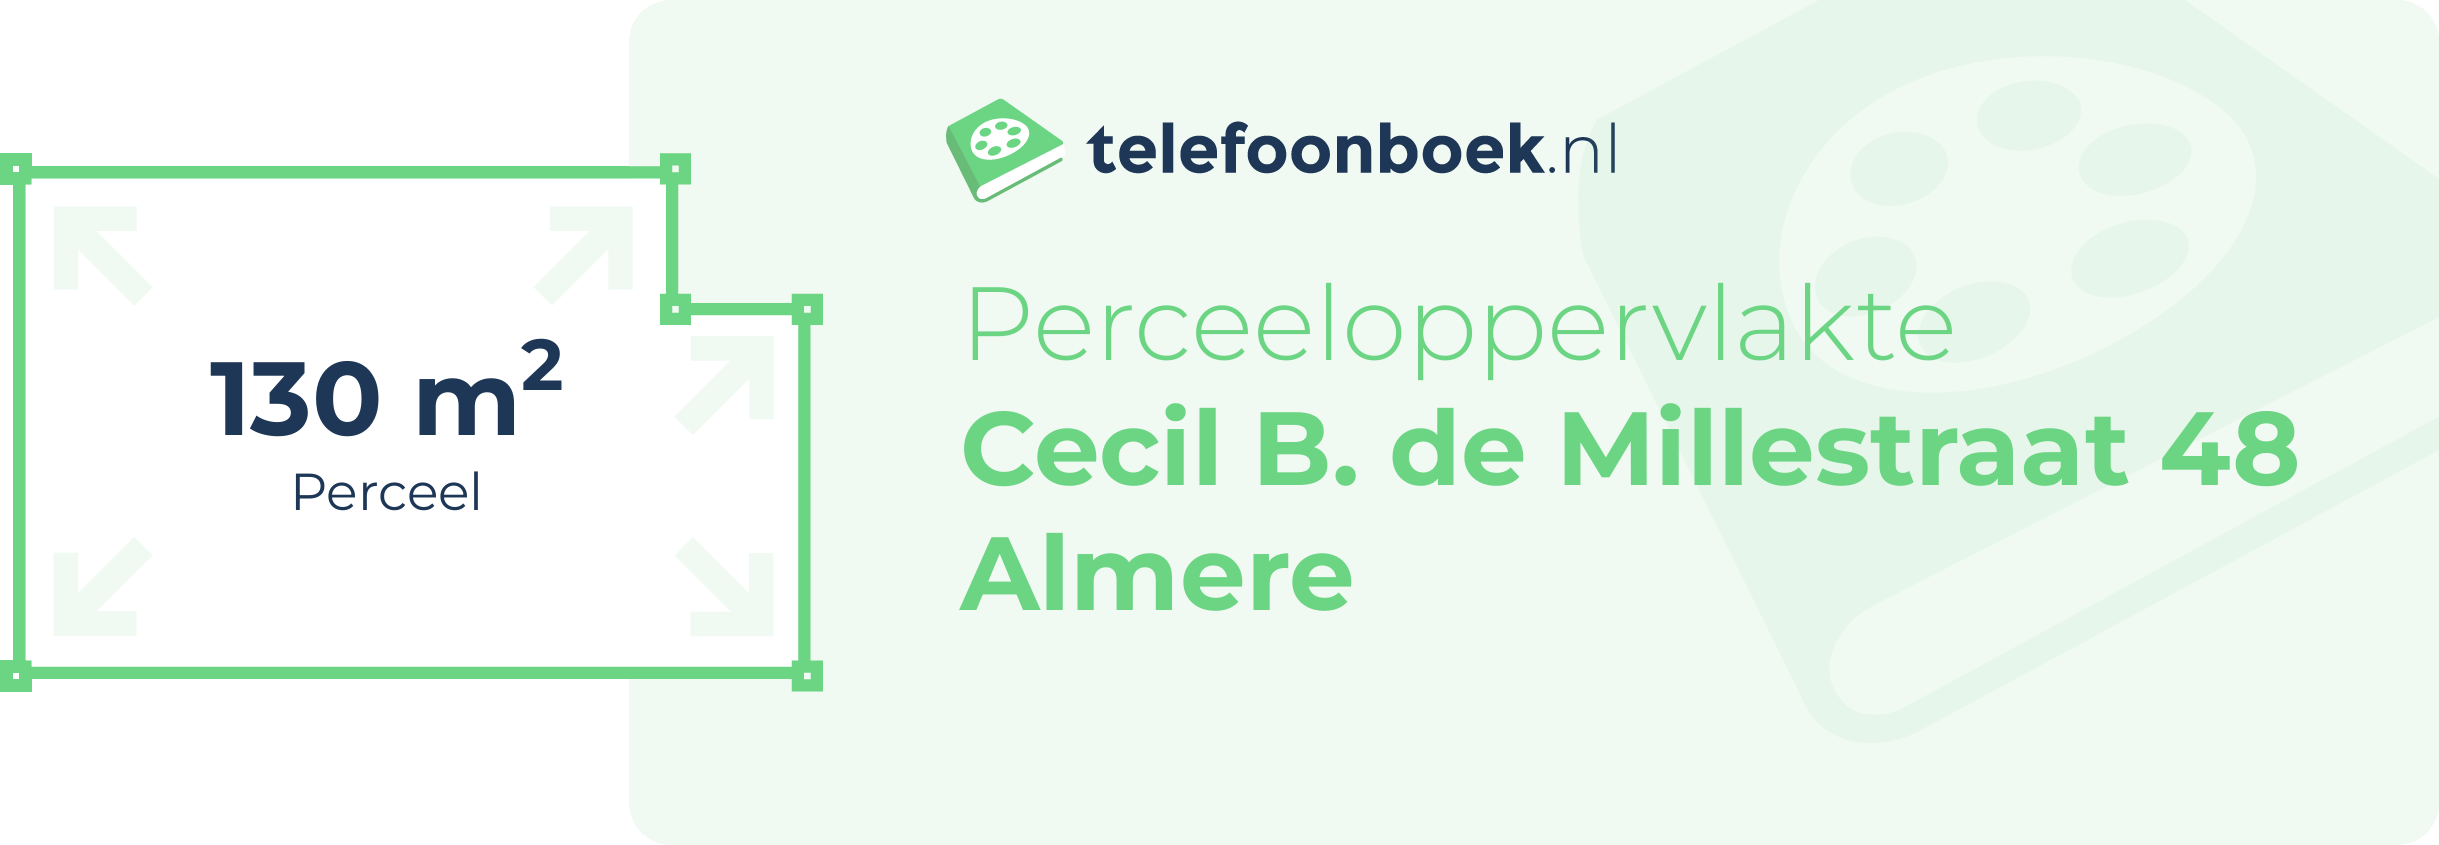 Perceeloppervlakte Cecil B. De Millestraat 48 Almere